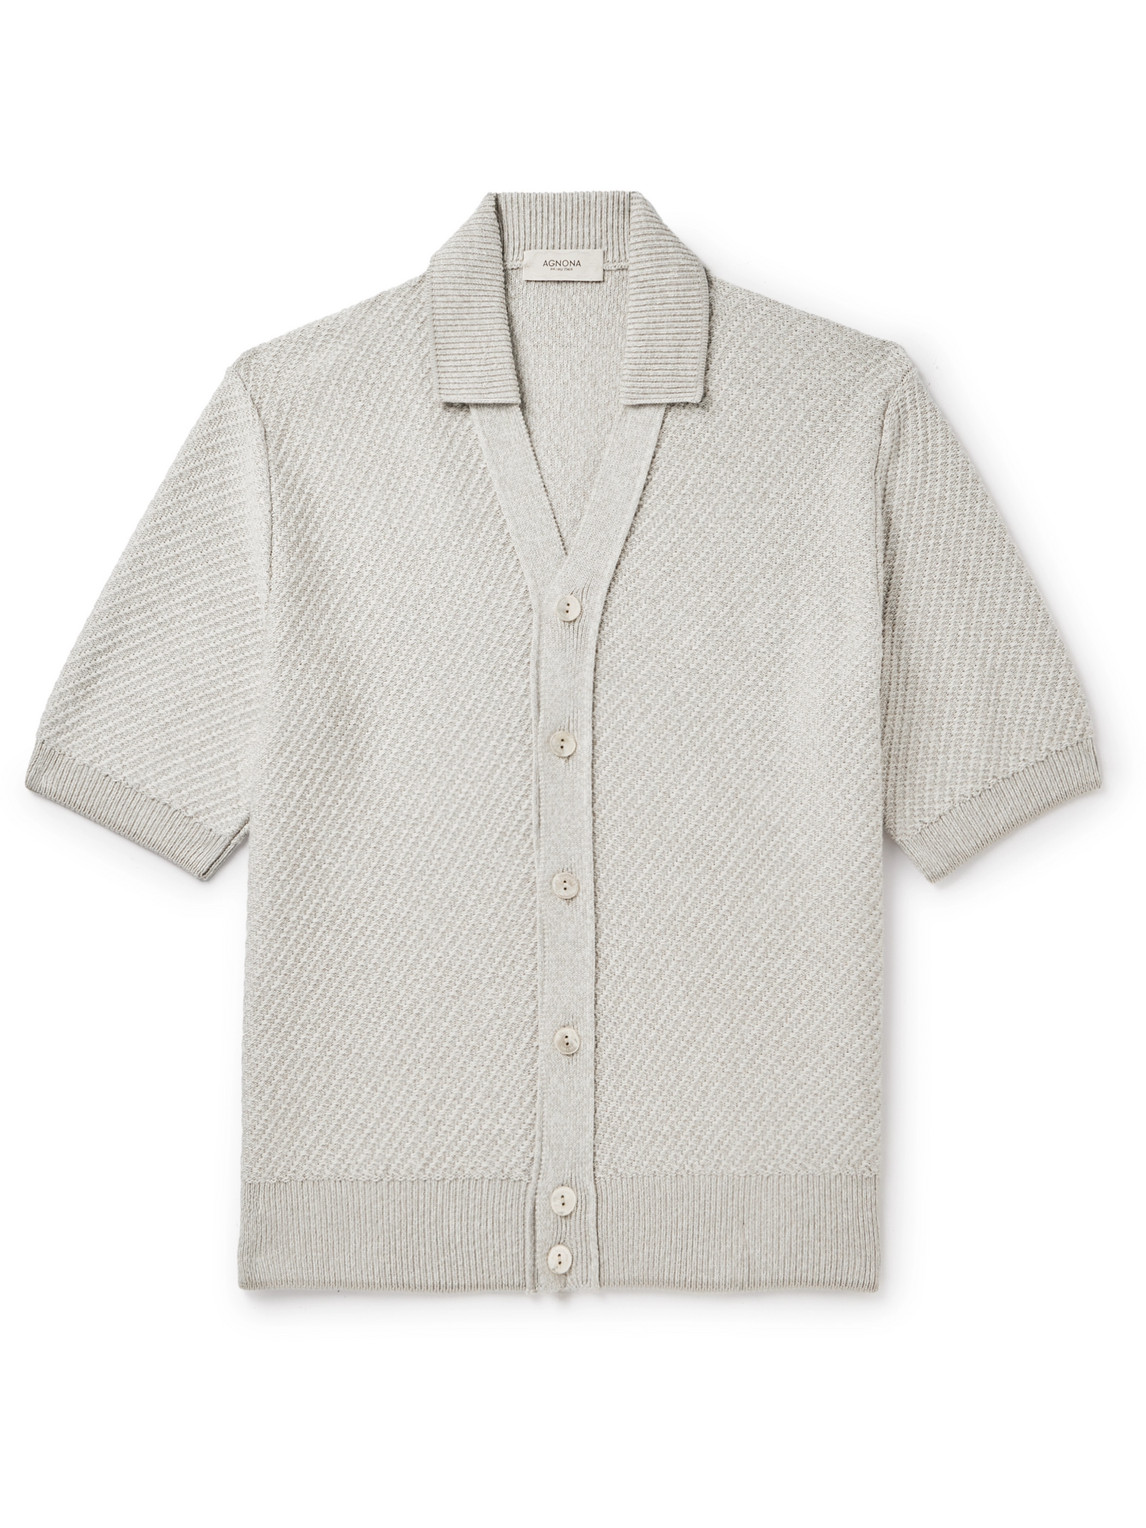 Agnona - Cotton, Silk and Cashmere-Blend Shirt - Men - Gray - XL von Agnona